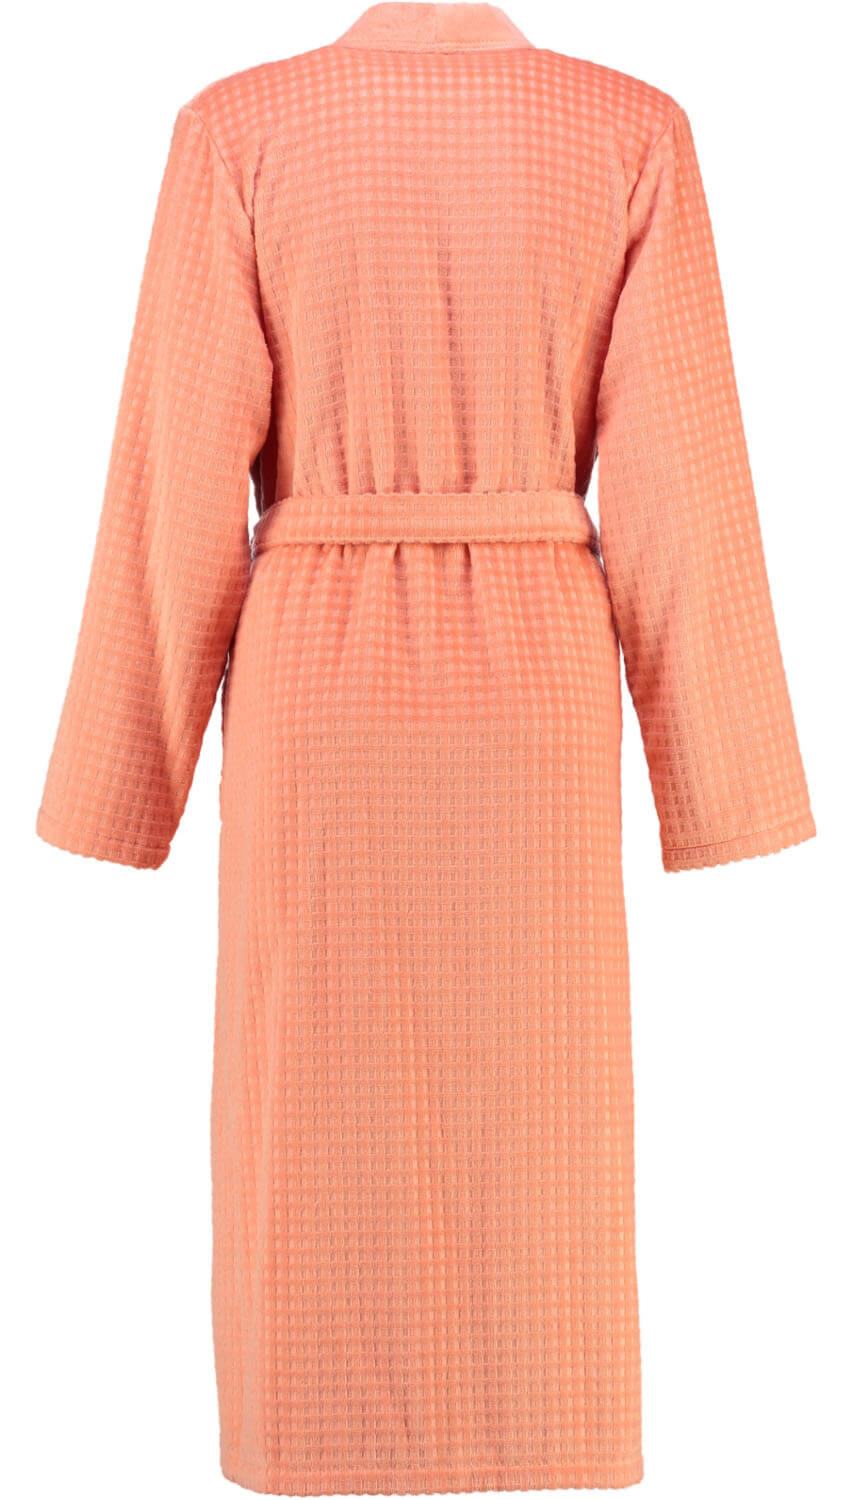 Женский халат Cawo Kimono Apricot ☞ Размер: 48